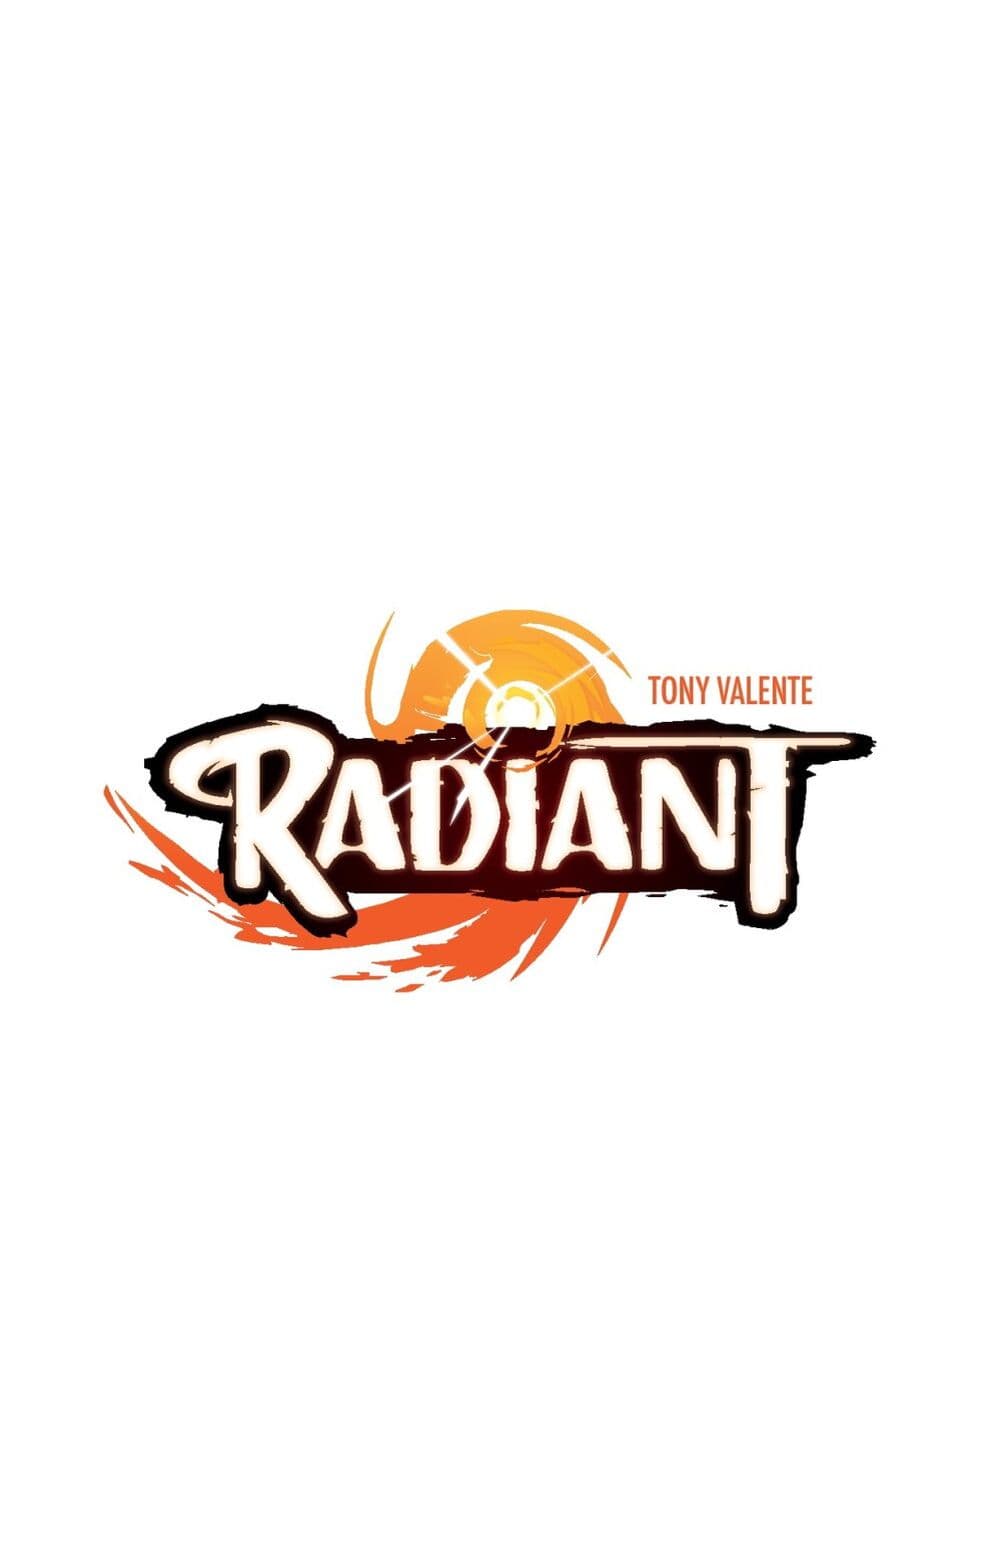 Radiant ตอนที่ 1 (2)